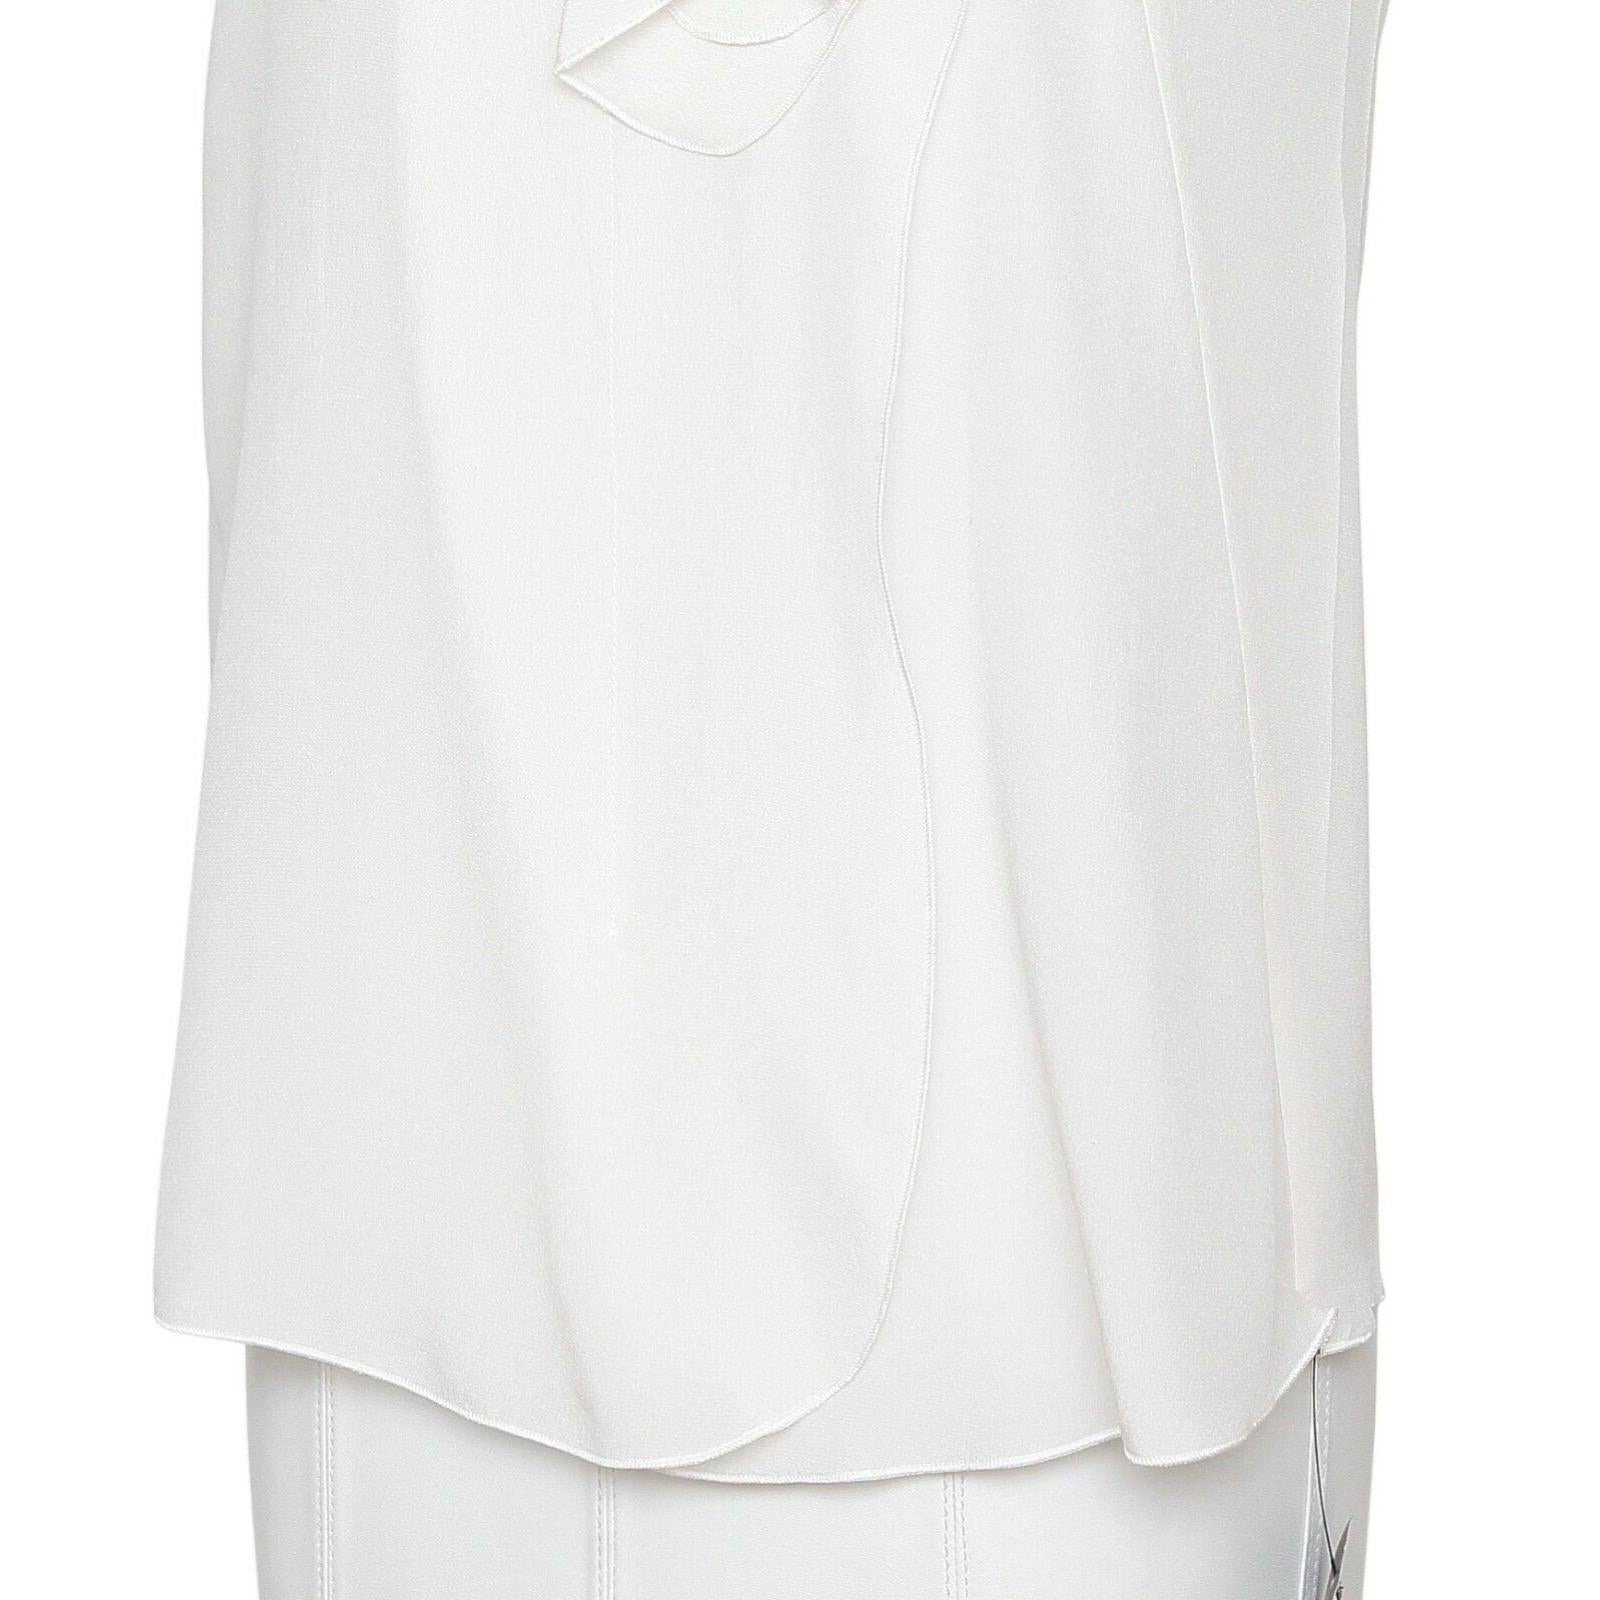 Women's MIU MIU Blouse Top Shirt Sleeveless Silk Ivory Ruffle Sz 36 BNWT For Sale